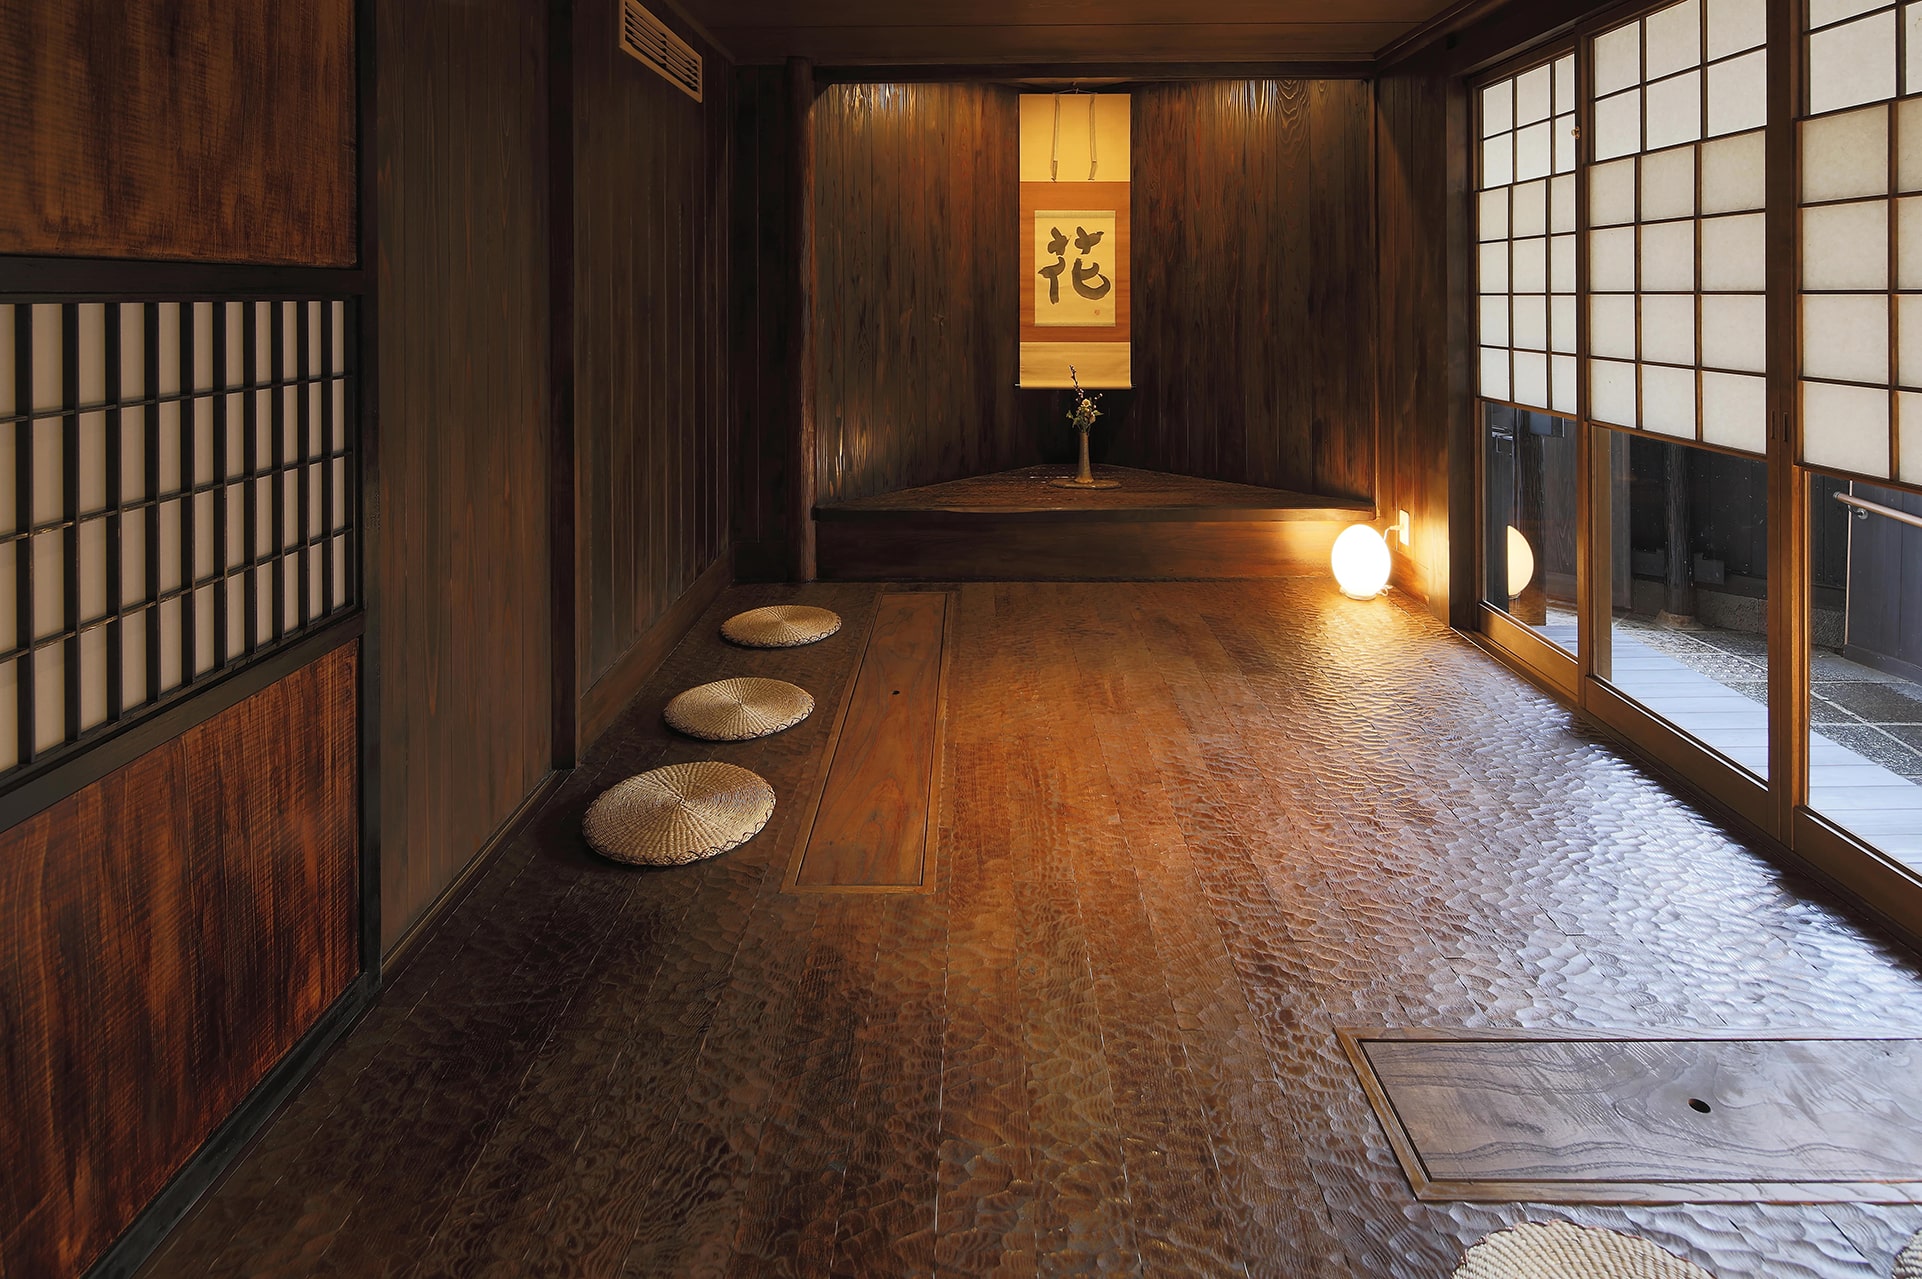 Urushitei ryokan tea ceremony room representing the wabi-sabi concept in Kyoto